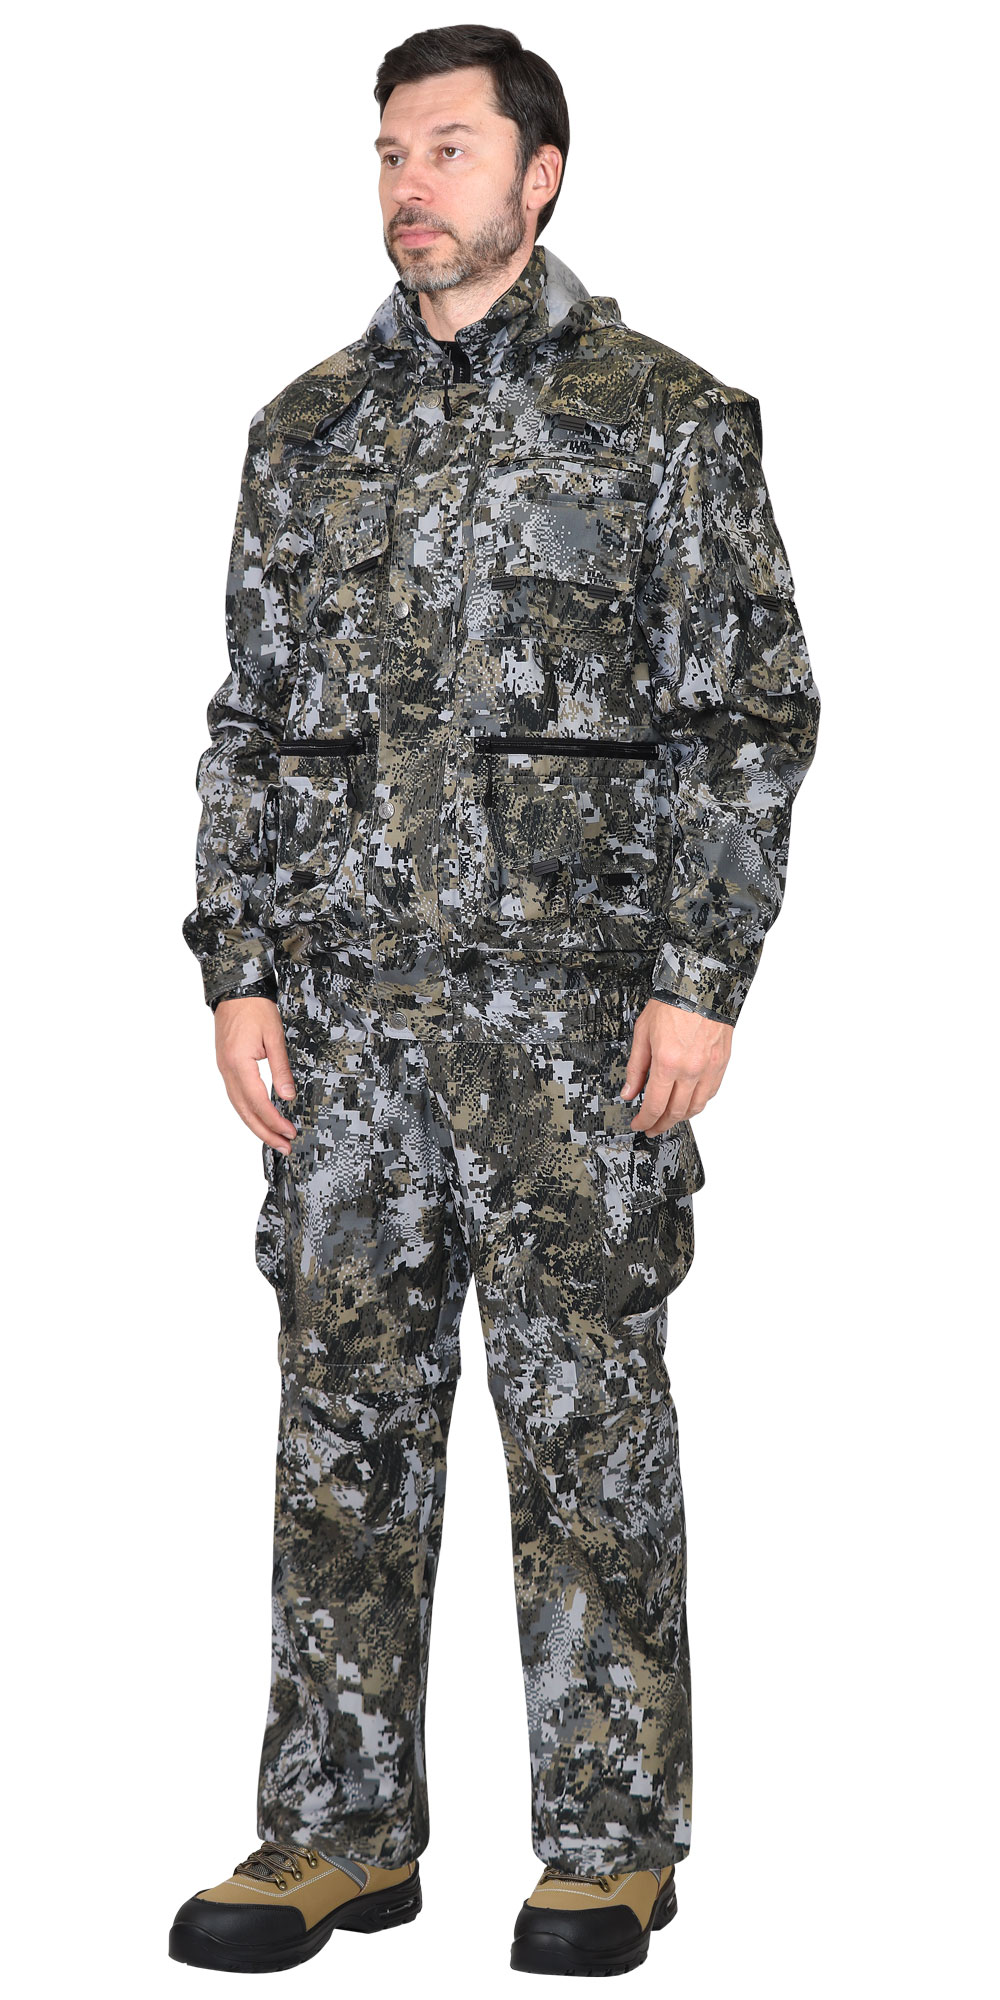 Летний костюм "СИРИУС-ТИГР" мужской (куртка и брюки), цвет: КМФ Город серый, ткань: Твилл